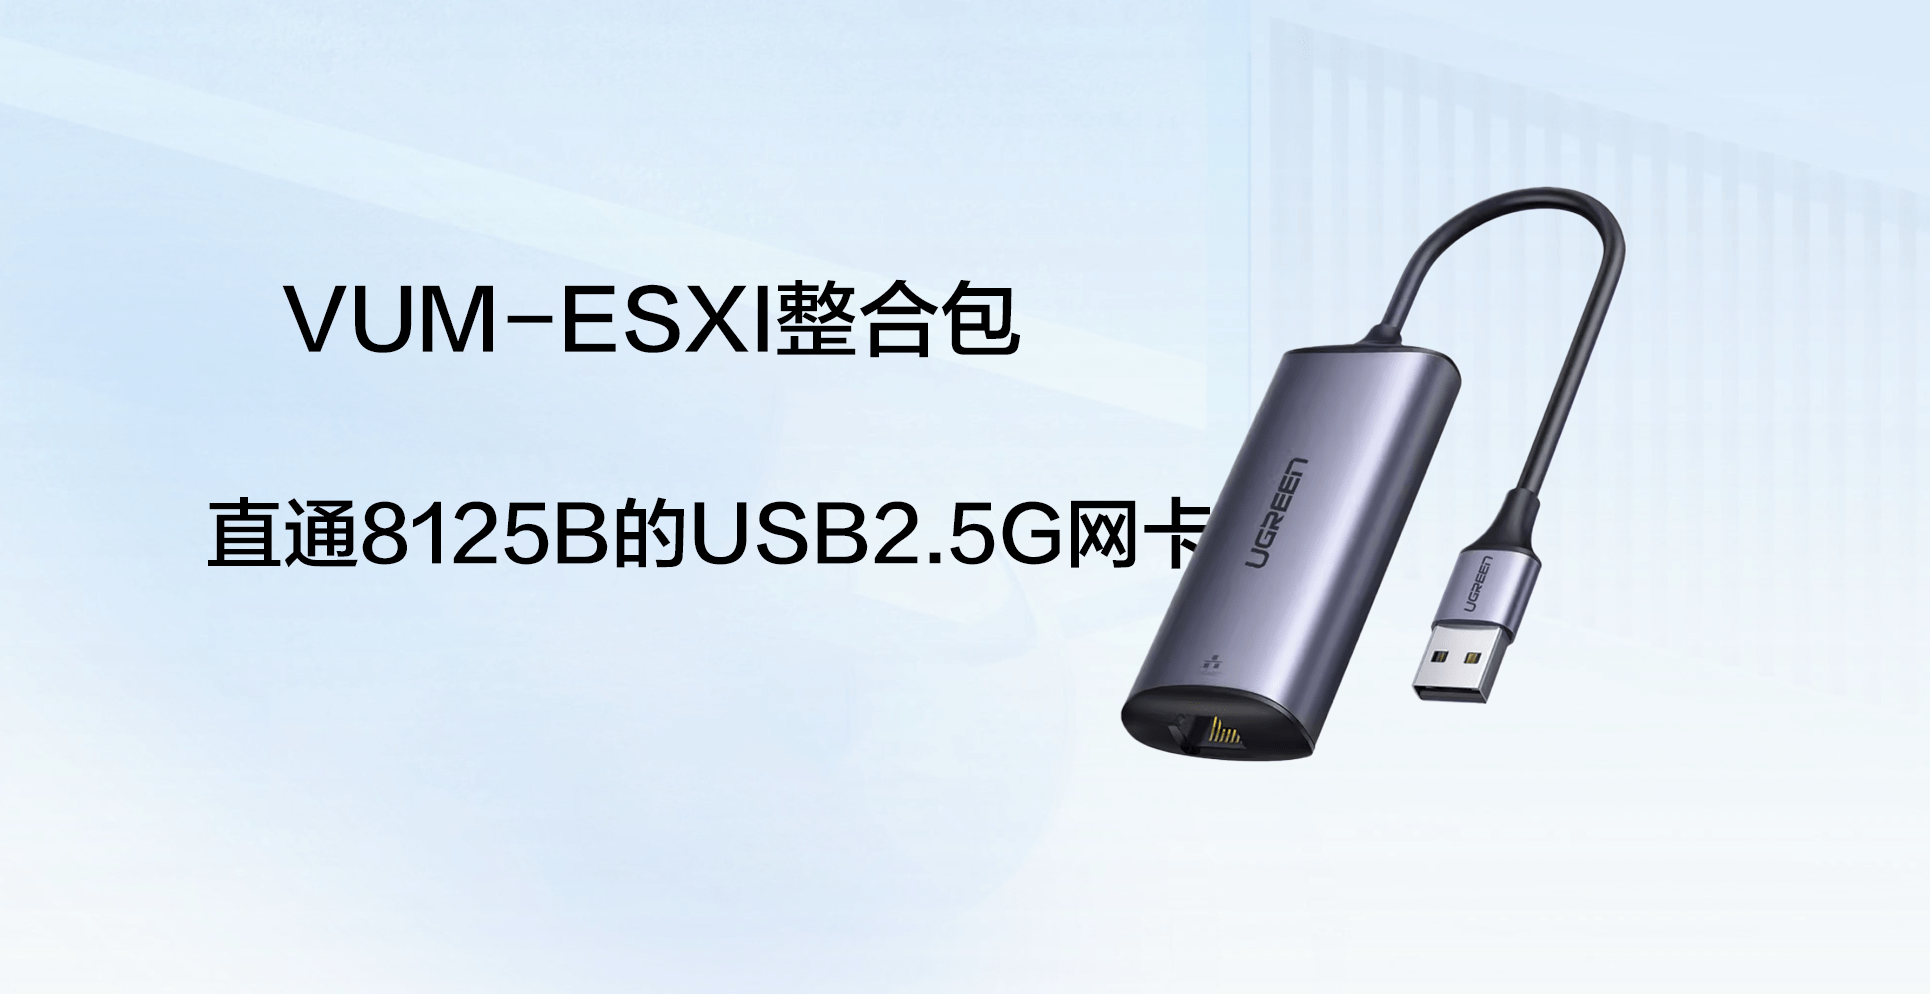 VUM-ESXI整合包中如何识别直通8125B的USB2.5G网卡【会员需求】-VUM星球